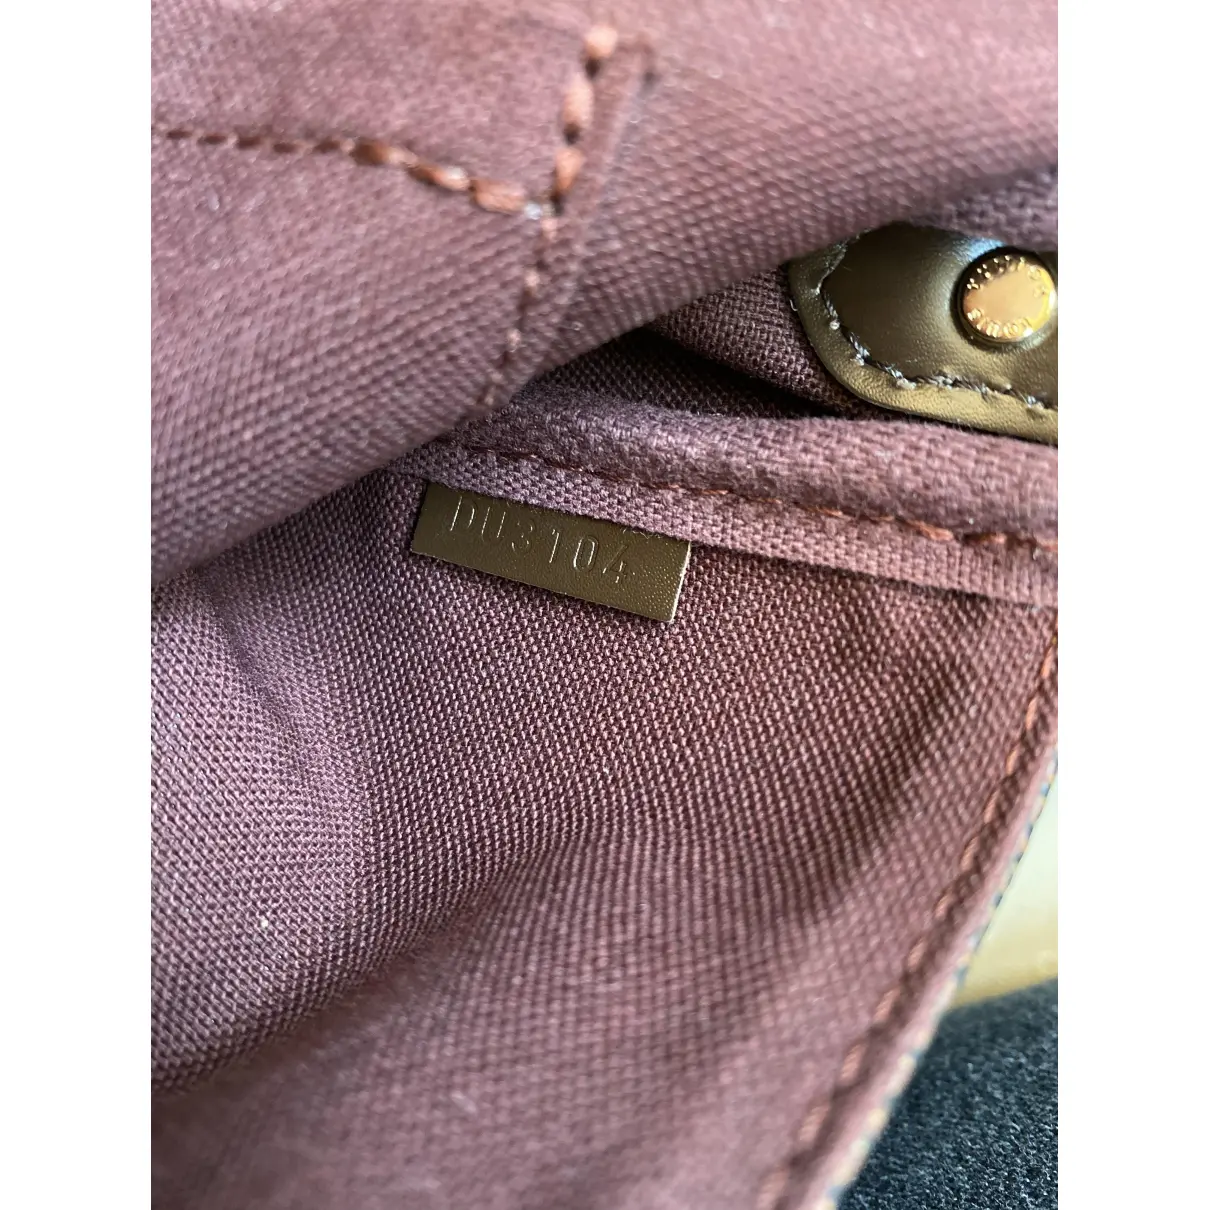 Buy Louis Vuitton Favorite cloth handbag online